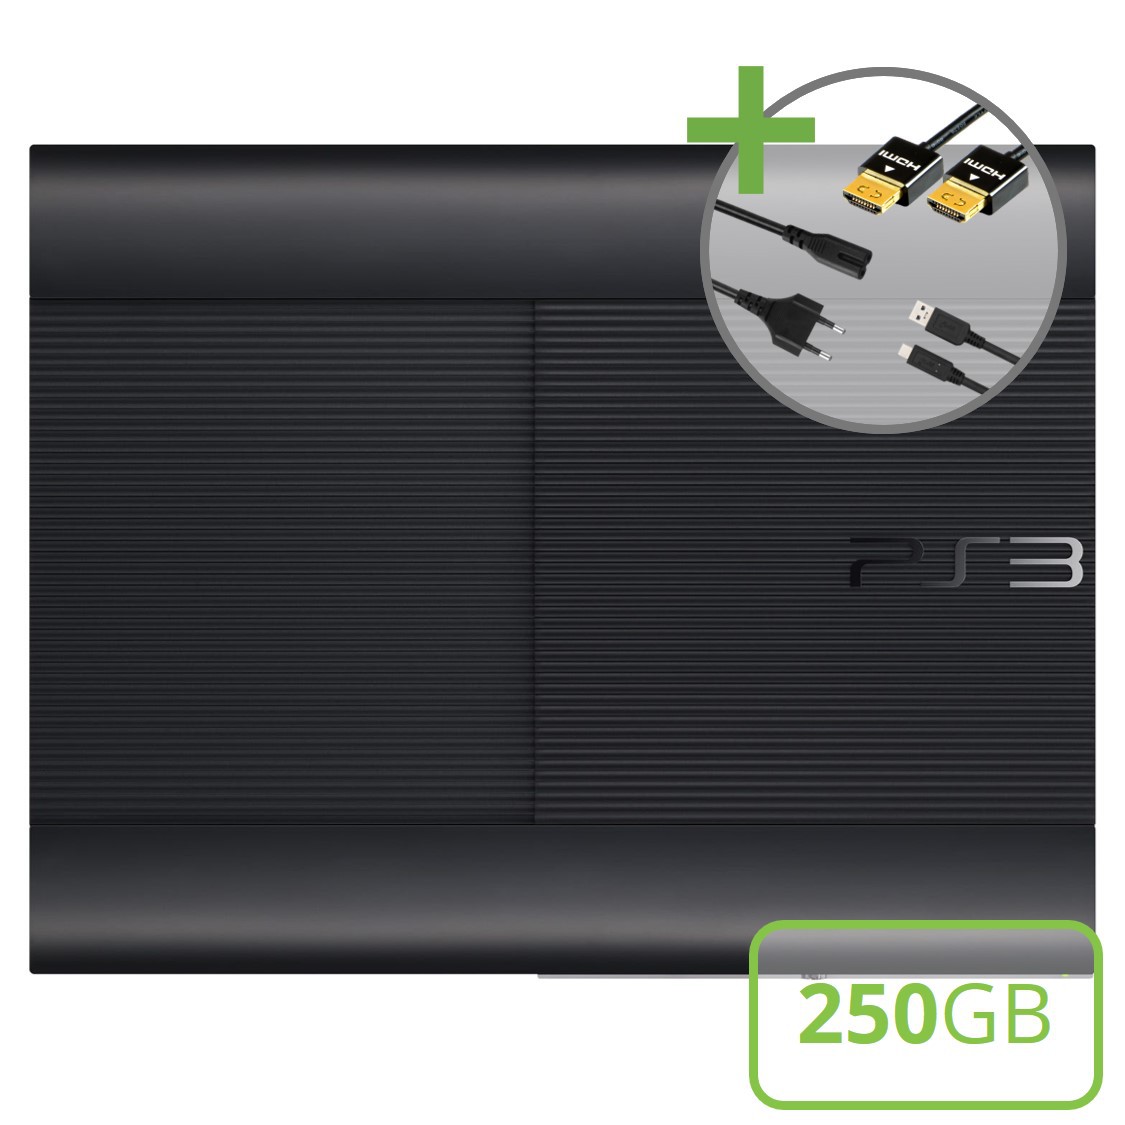 Sony PlayStation 3 Super Slim (250GB) Starter Pack - DualShock Edition - Playstation 3 Hardware - 3